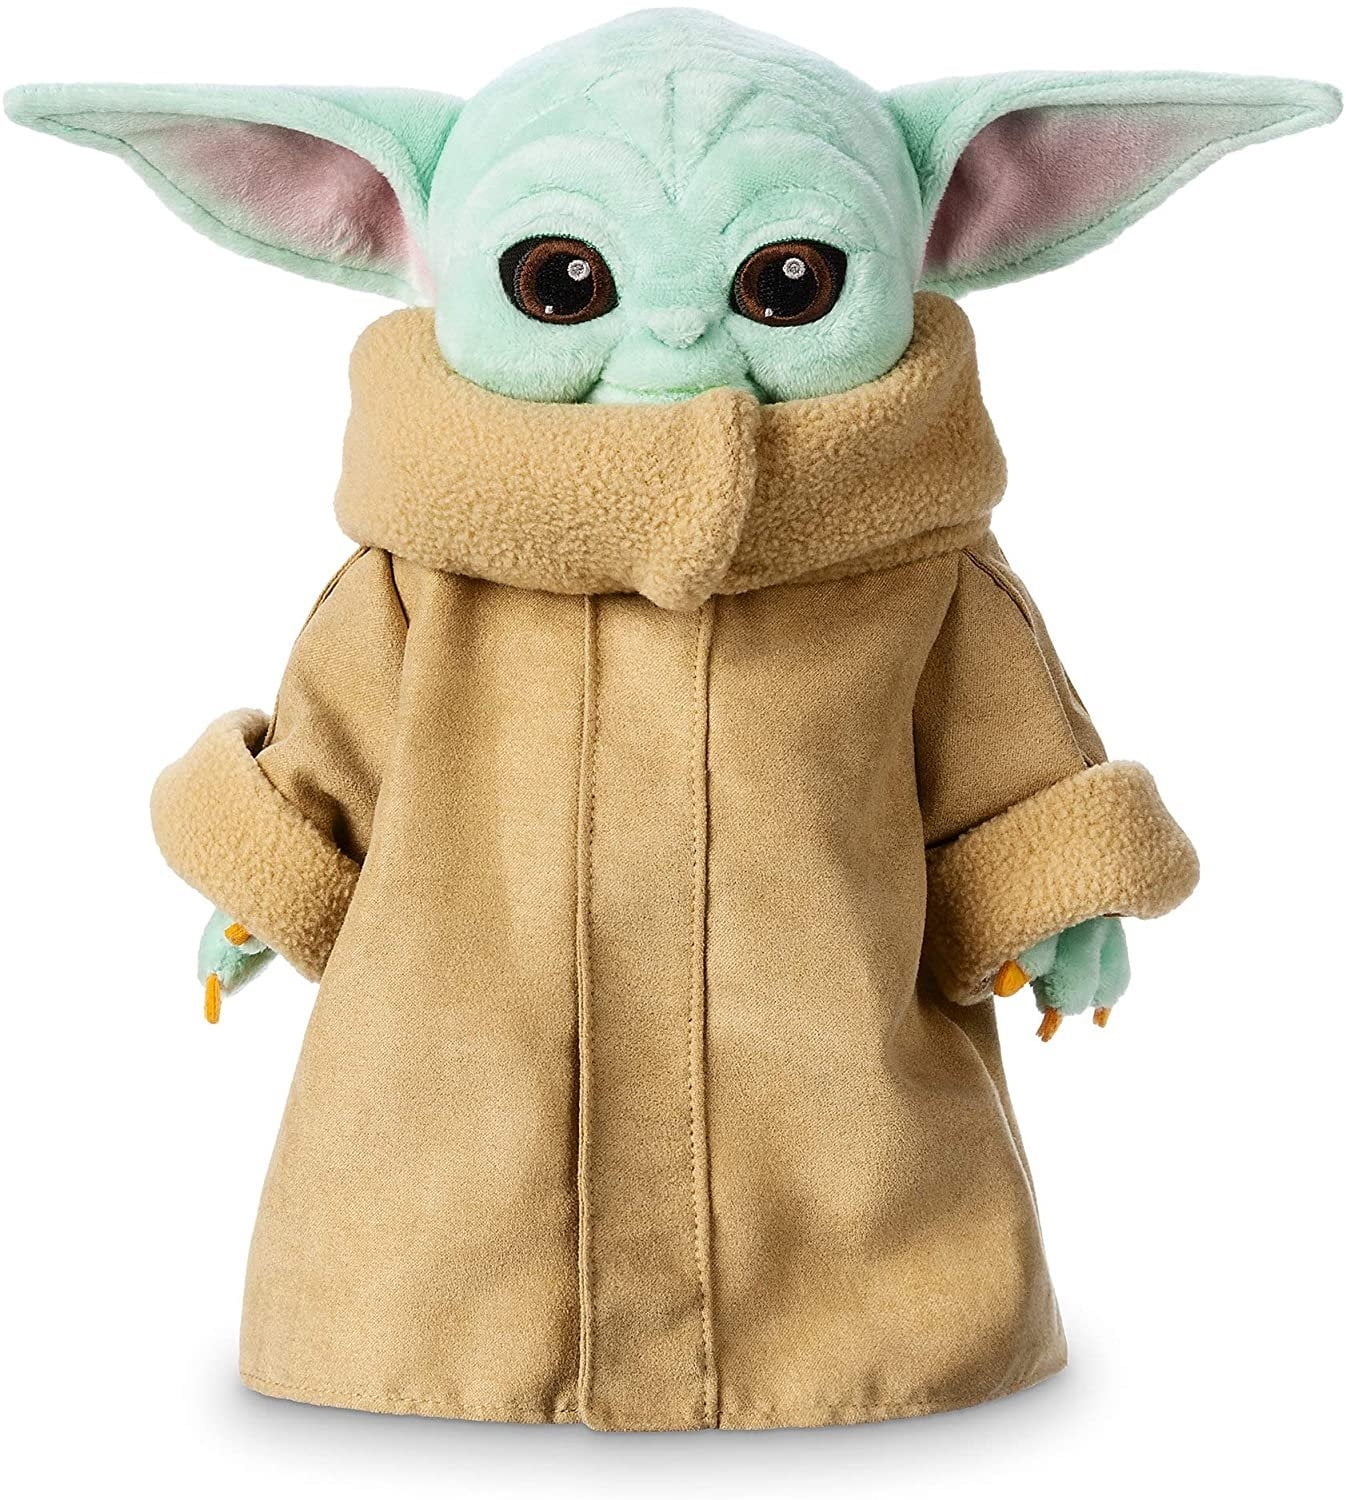 Star Wars Yoda The Child 11 inch Plush Toy GWD85 for sale online 